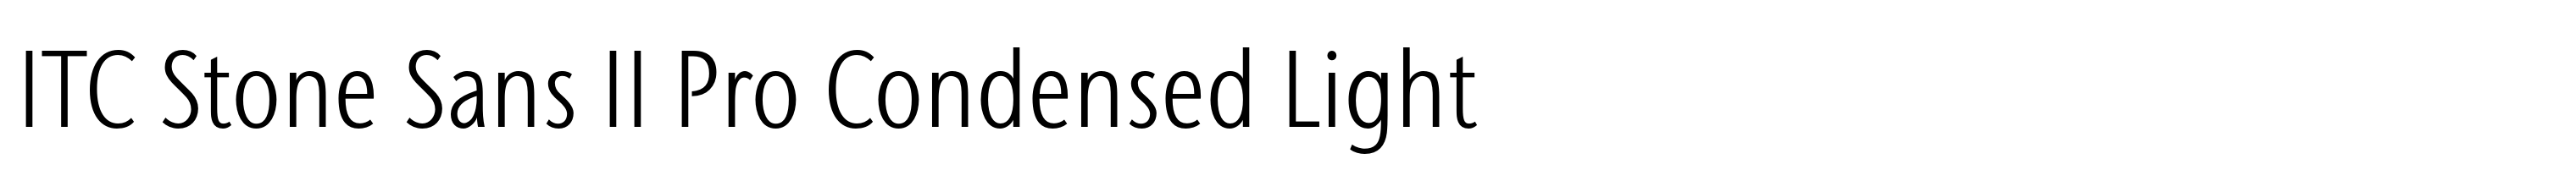 ITC Stone Sans II Pro Condensed Light